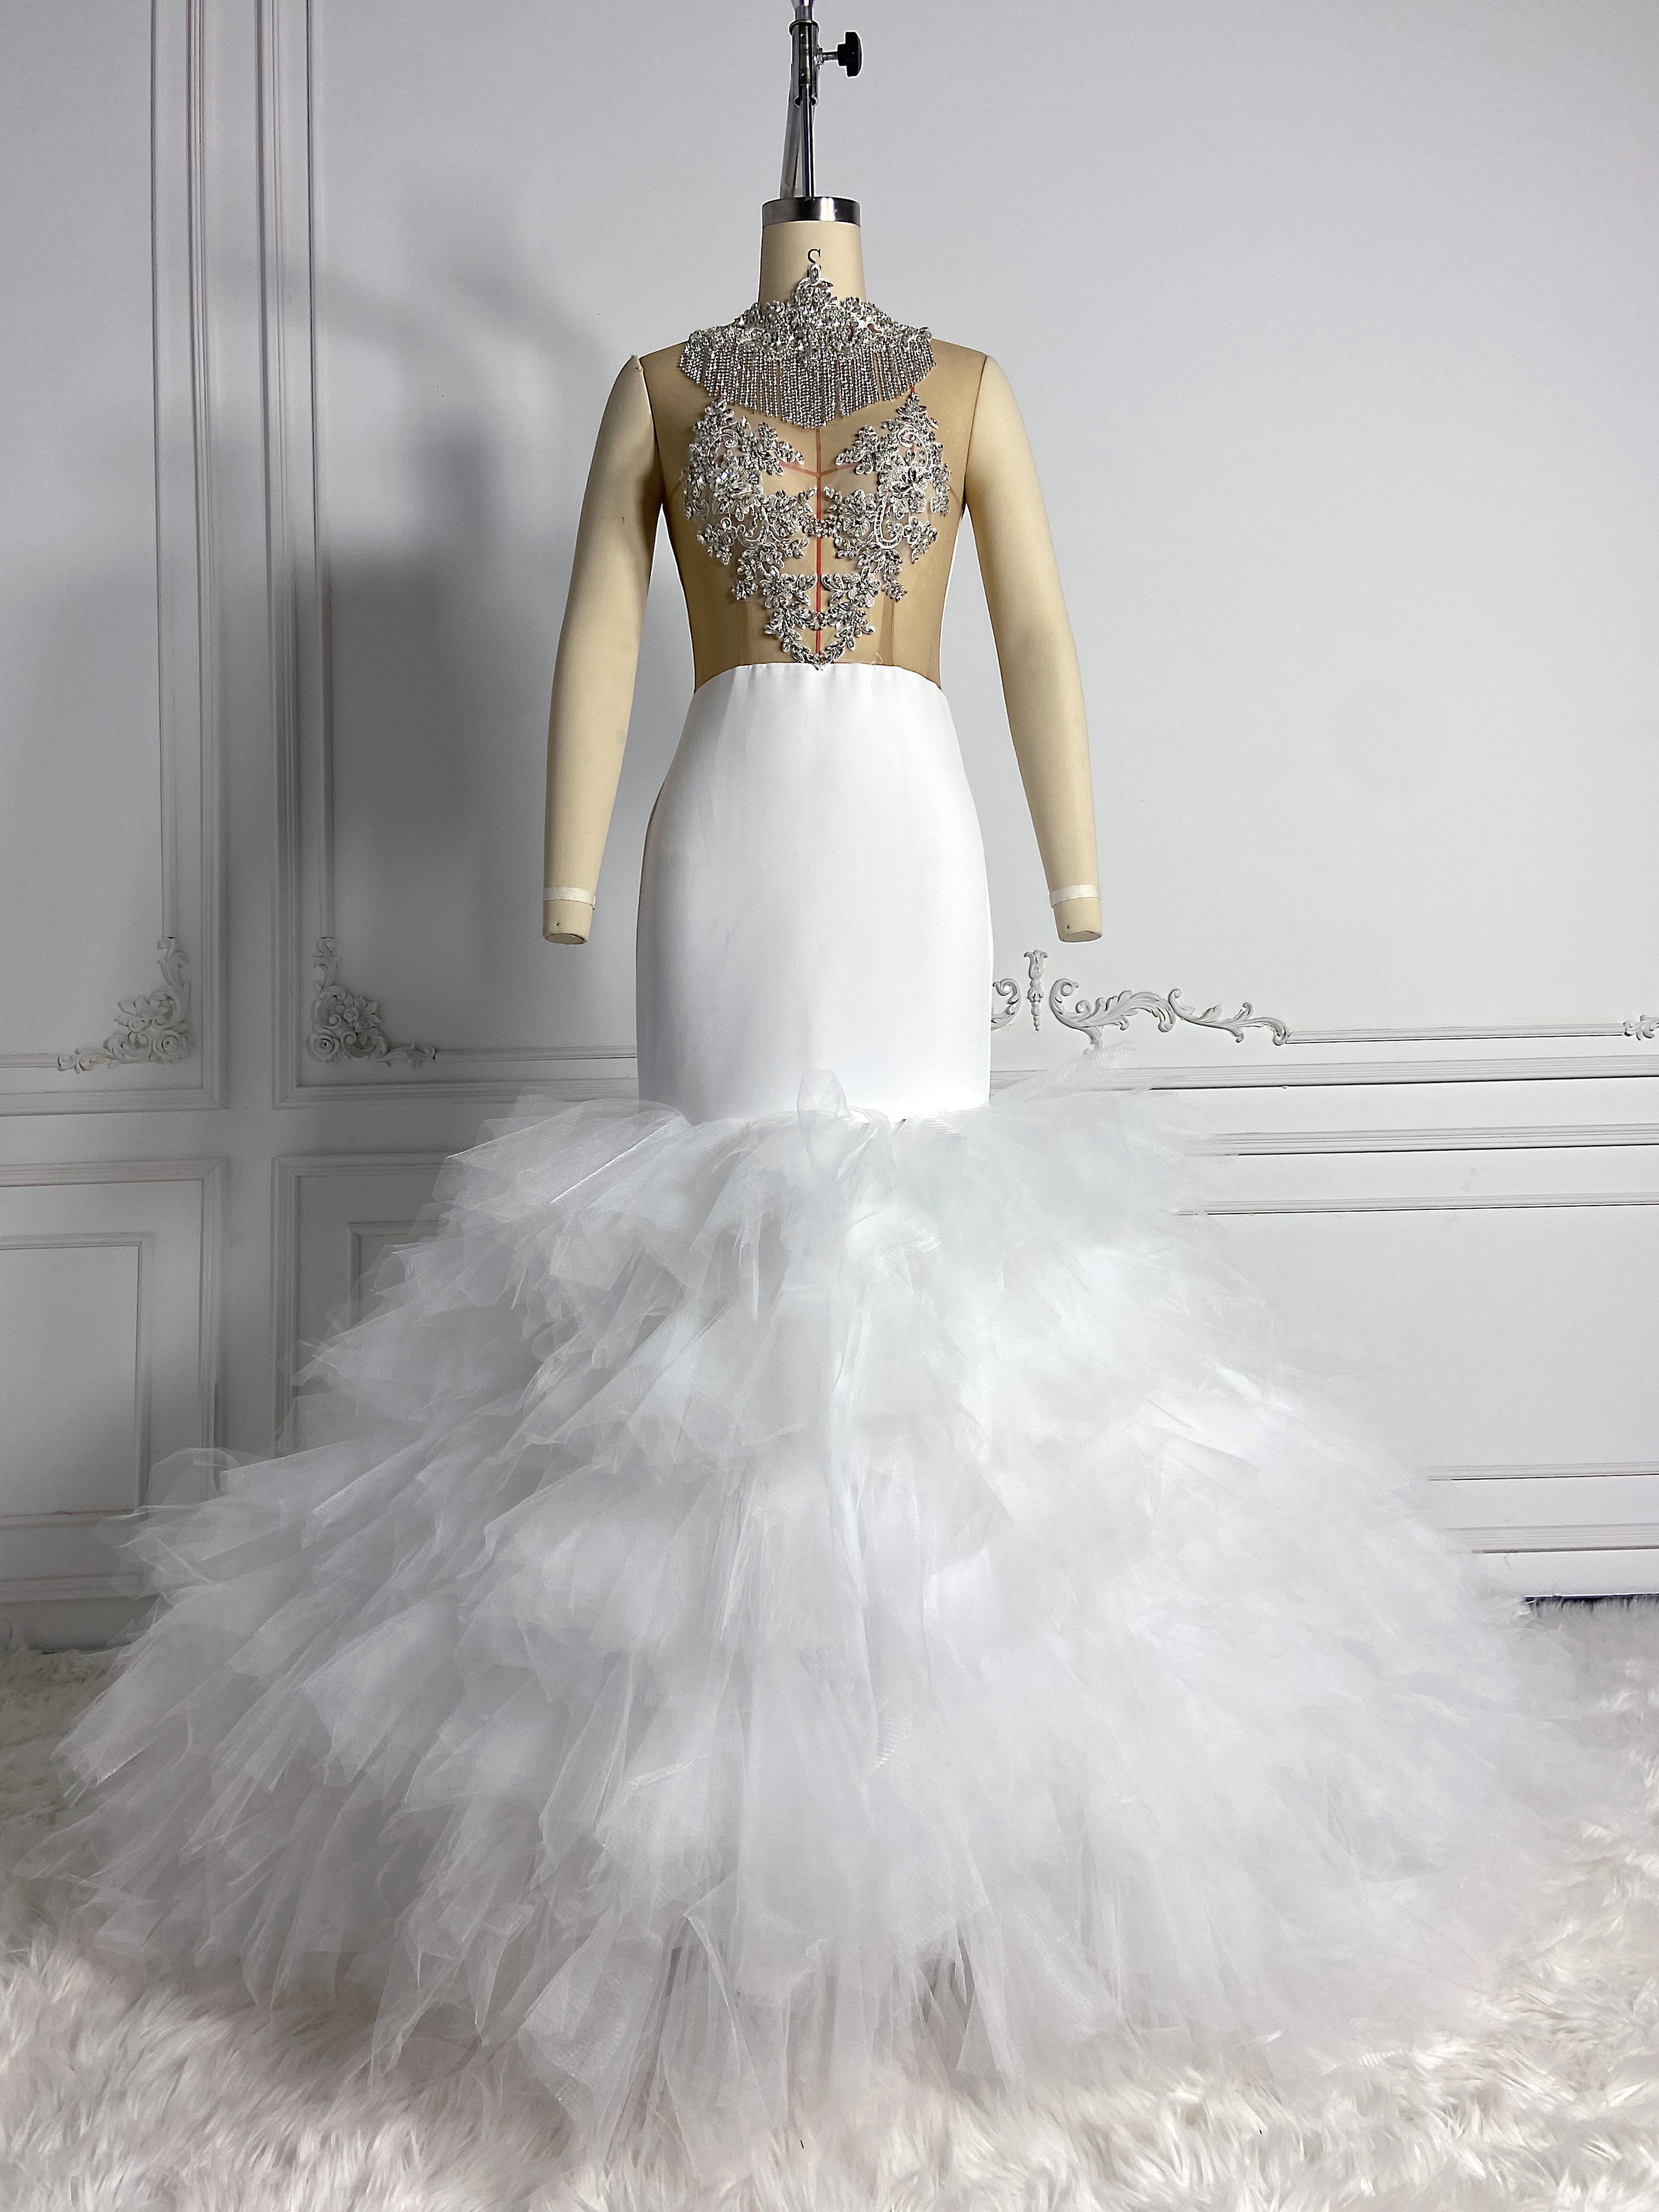 Elegant White Gauze with Rhinestones Gown